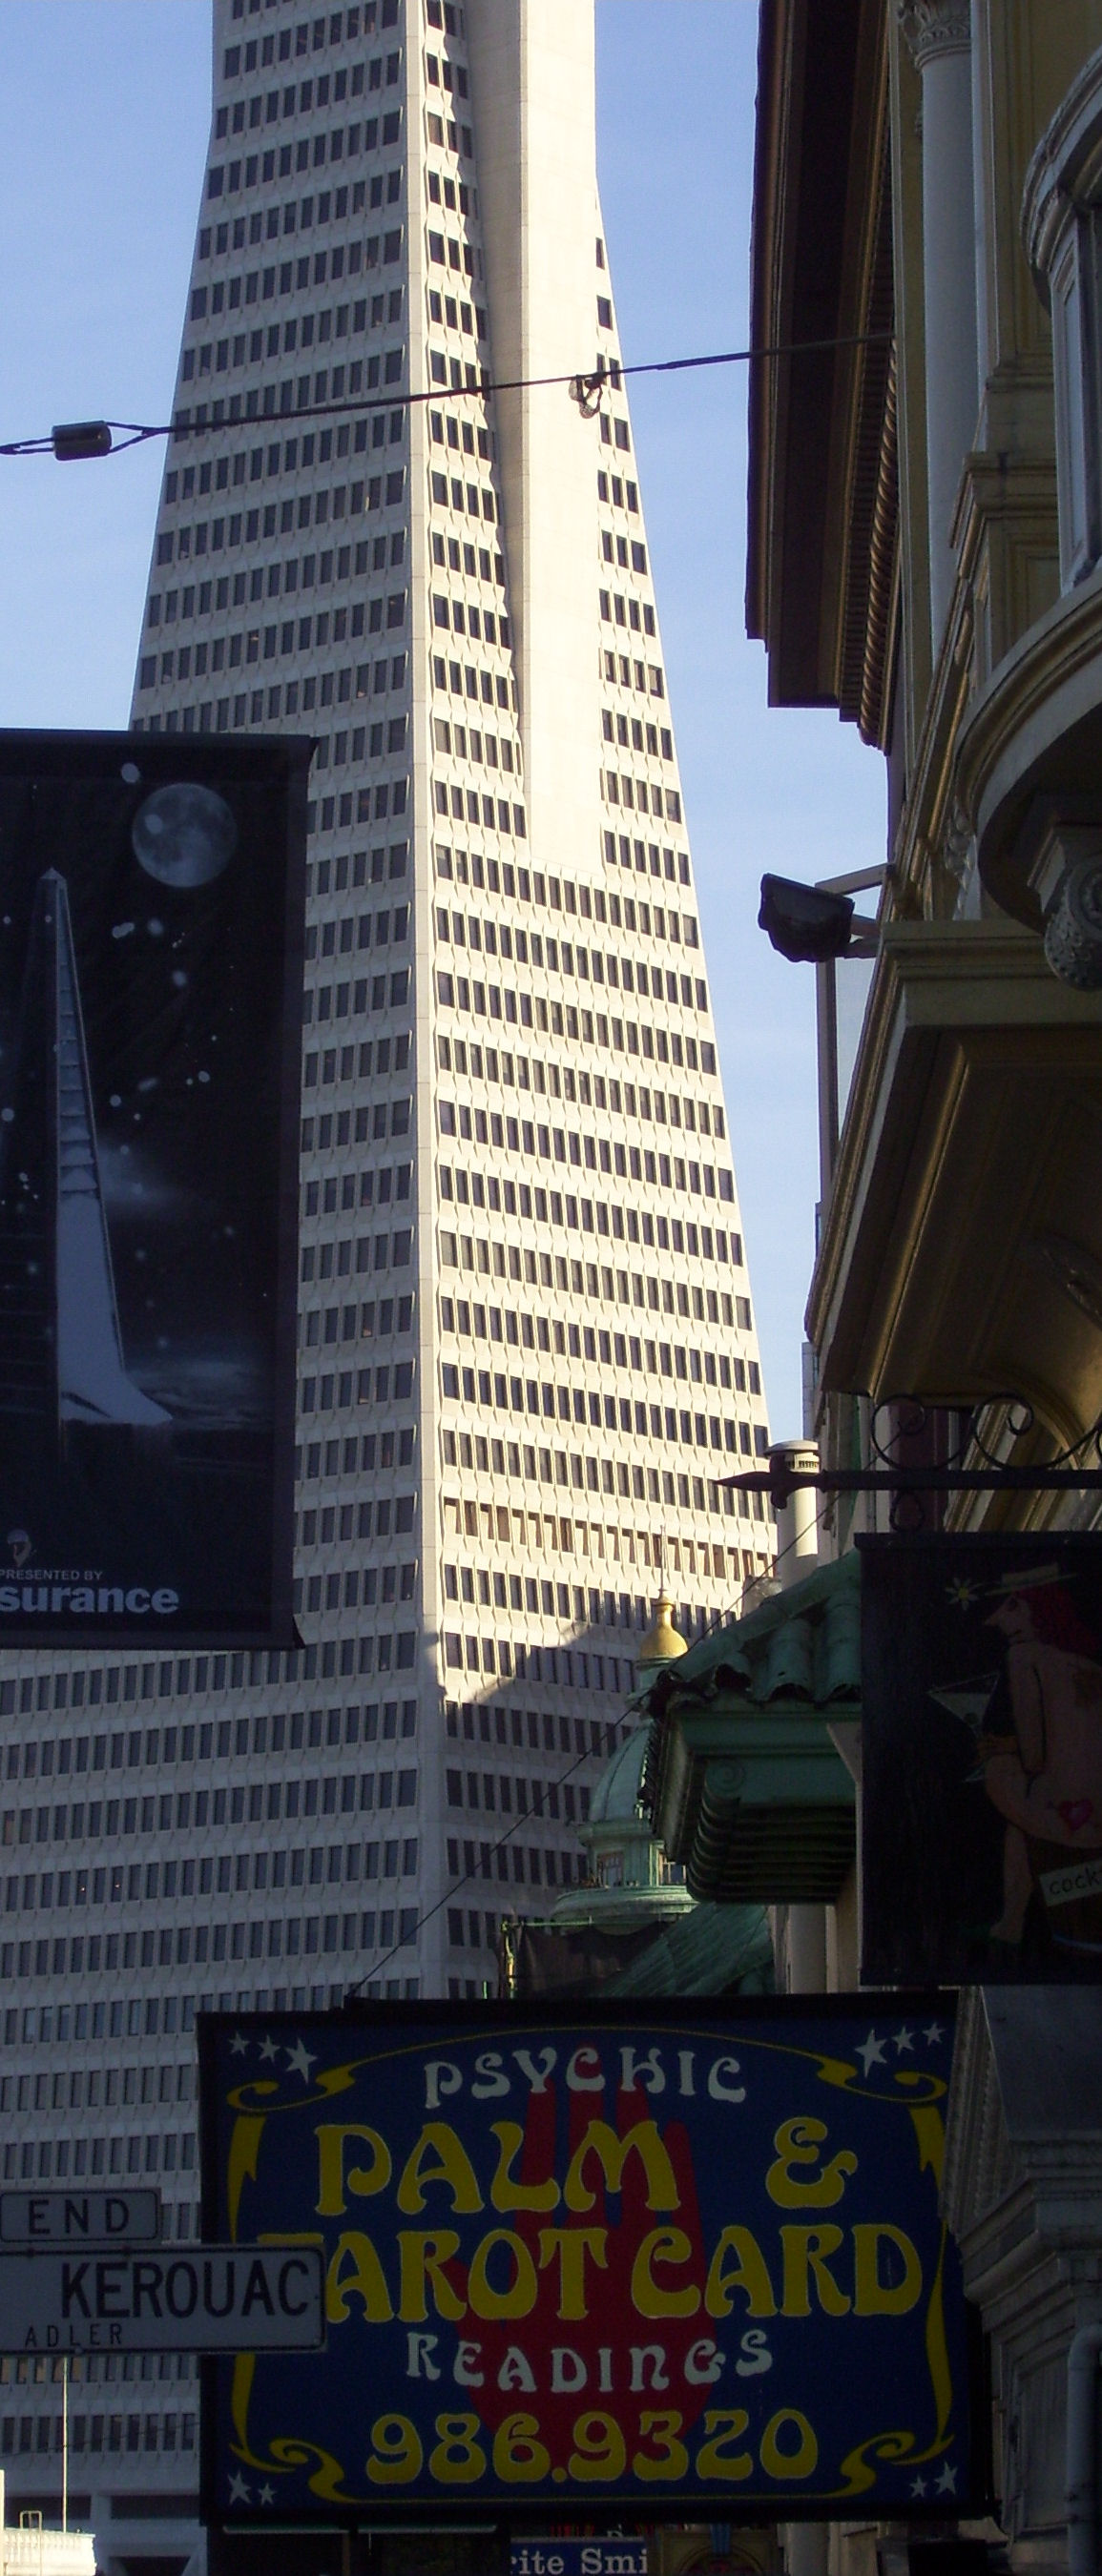 San Francisco 2007